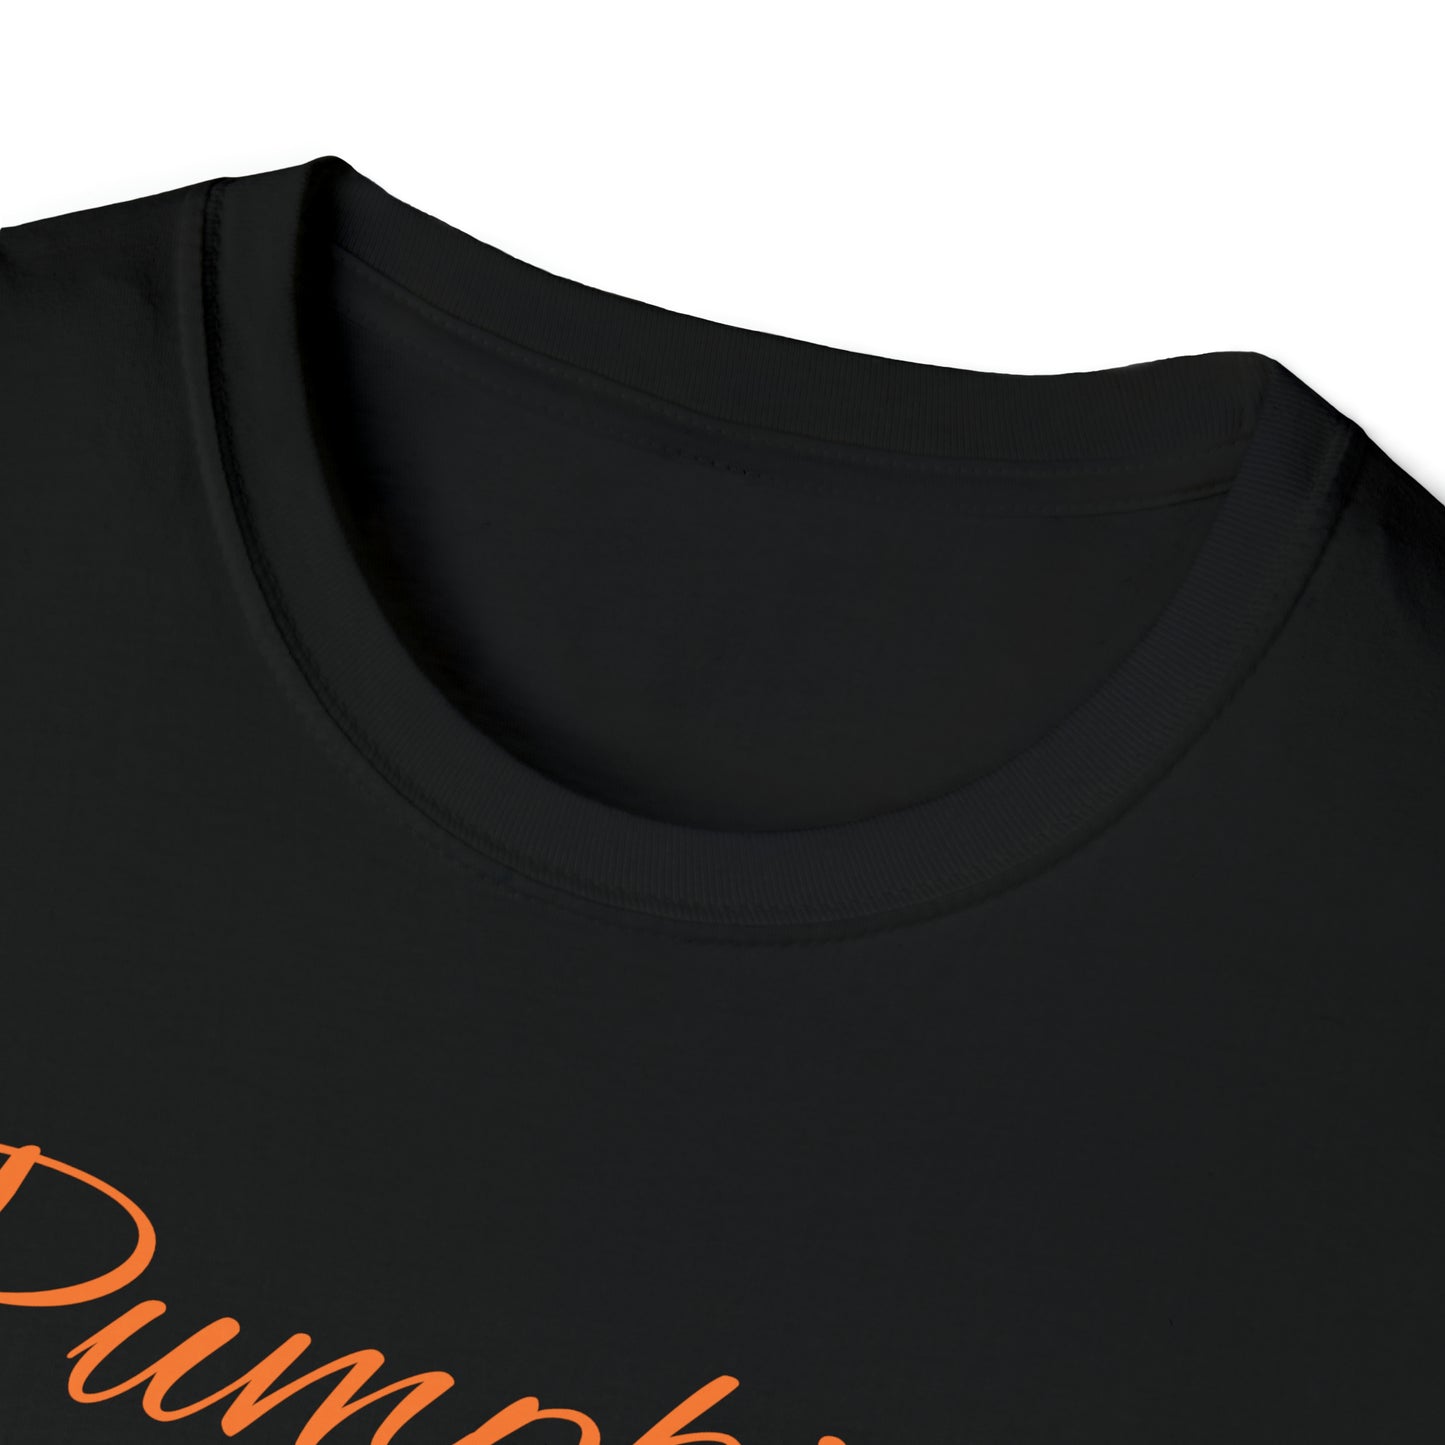 Pumpkin Spice No Graphic Unisex Softstyle T-Shirt